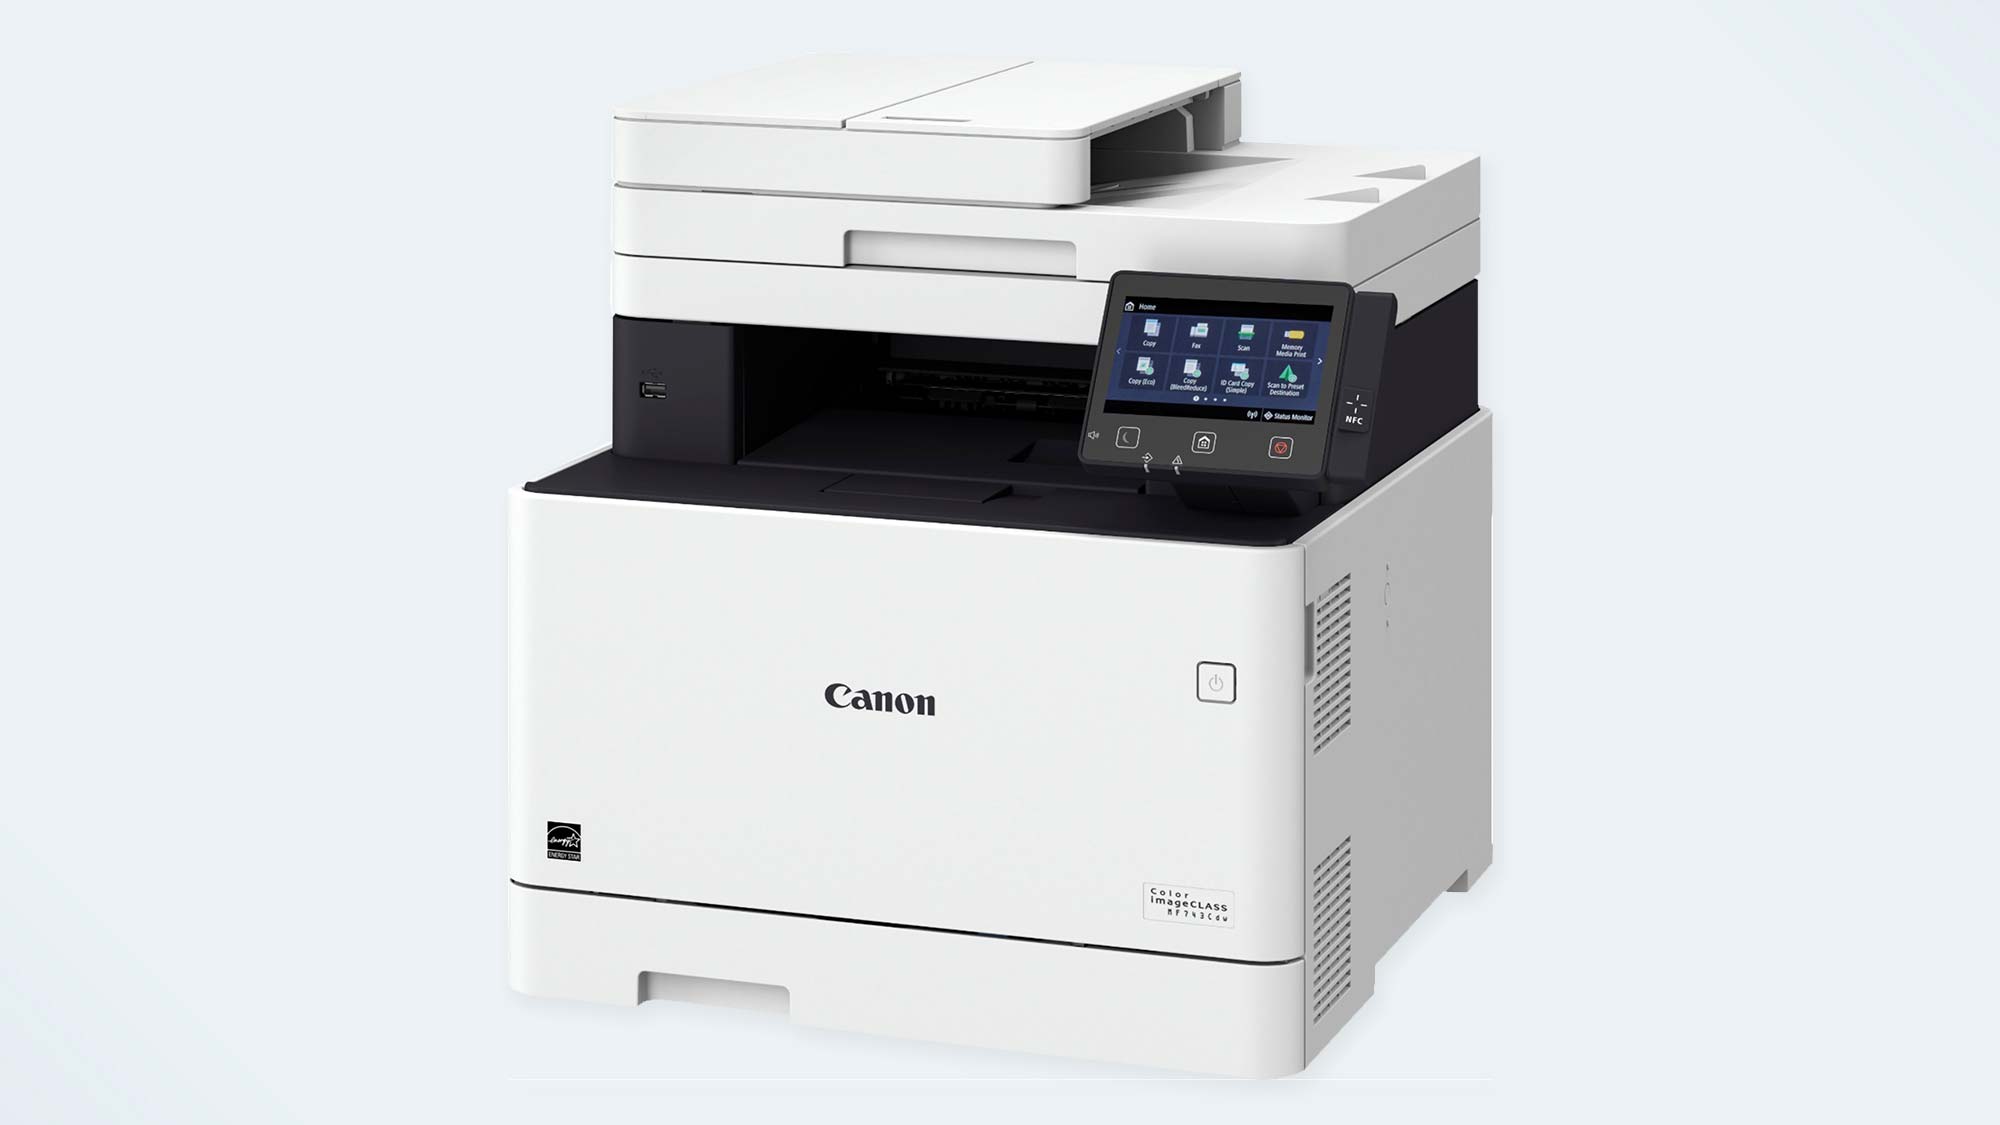 Canon ImageClass MF743Cdw small business laser printer